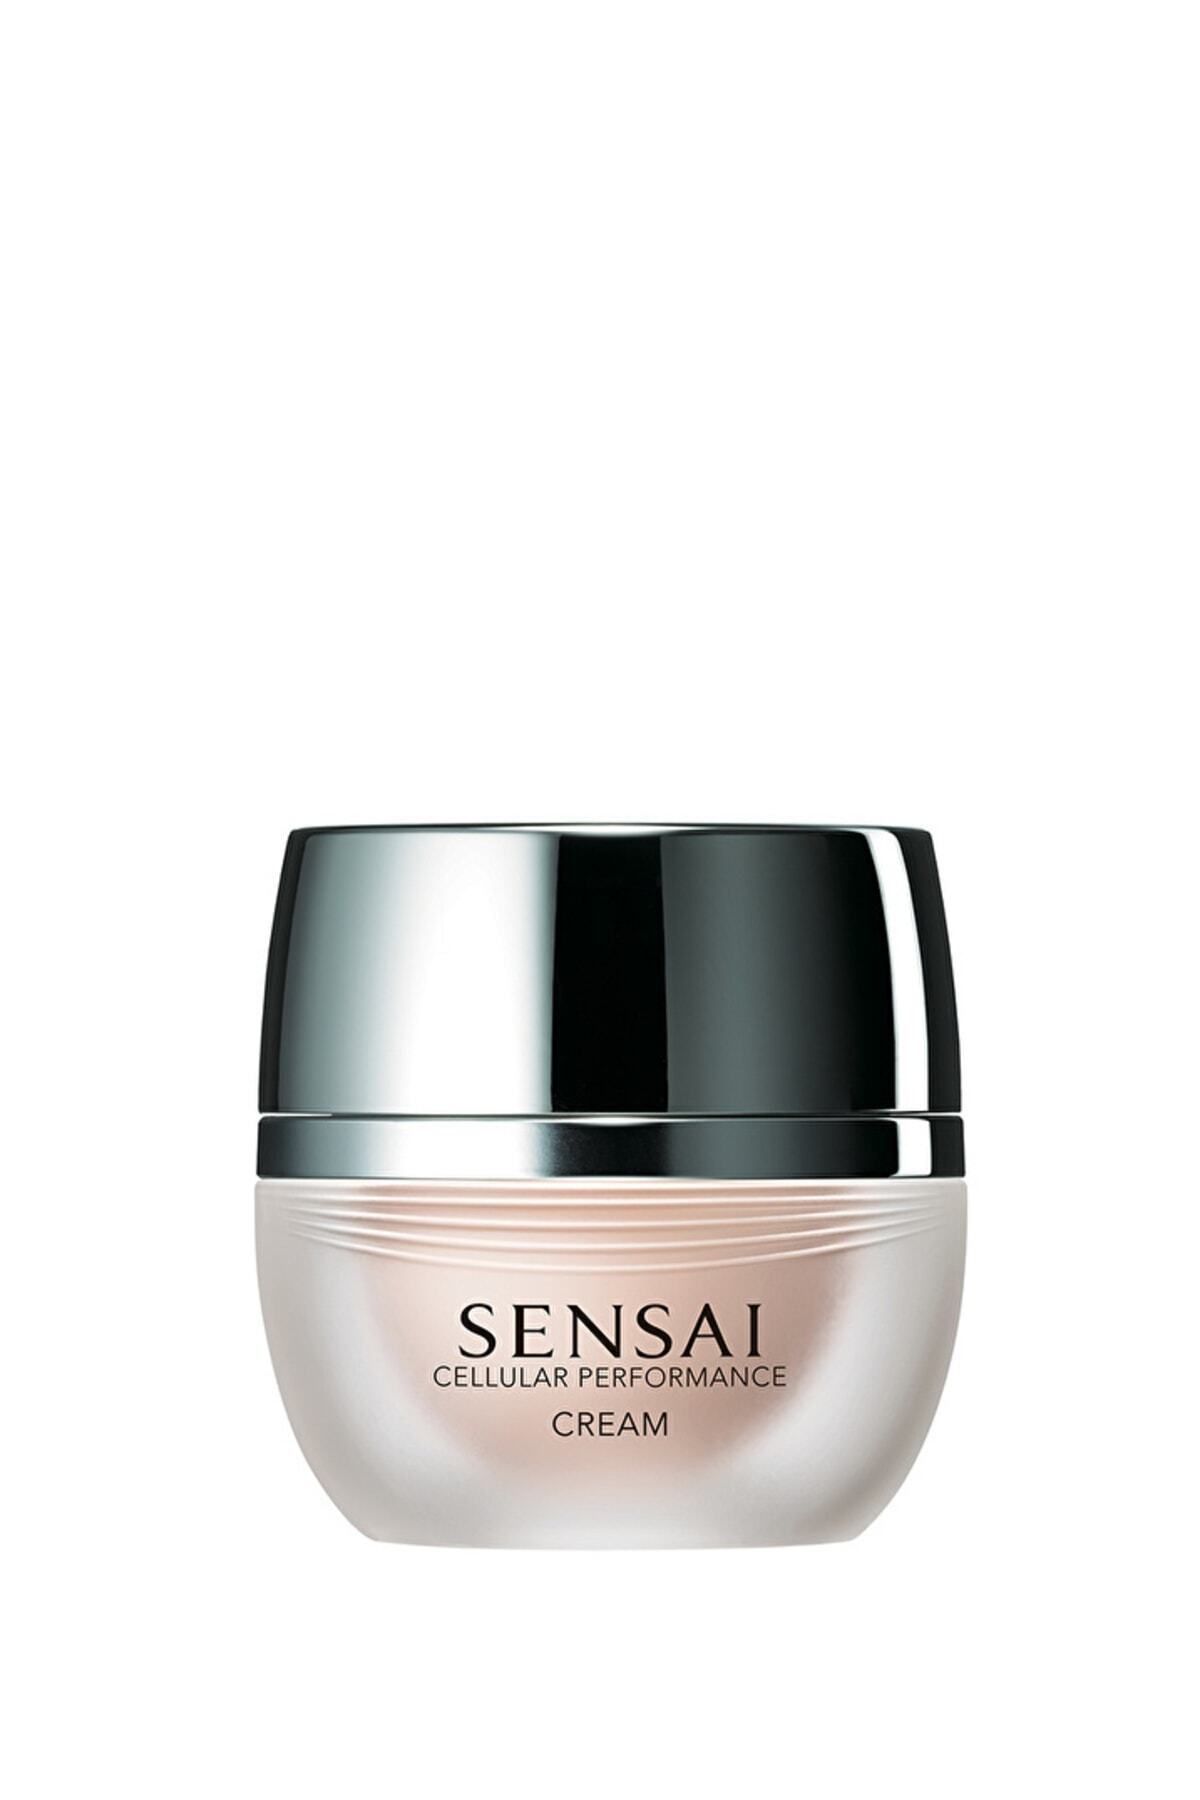 Sensai Cellular Performance Cream 40ml Facelight375